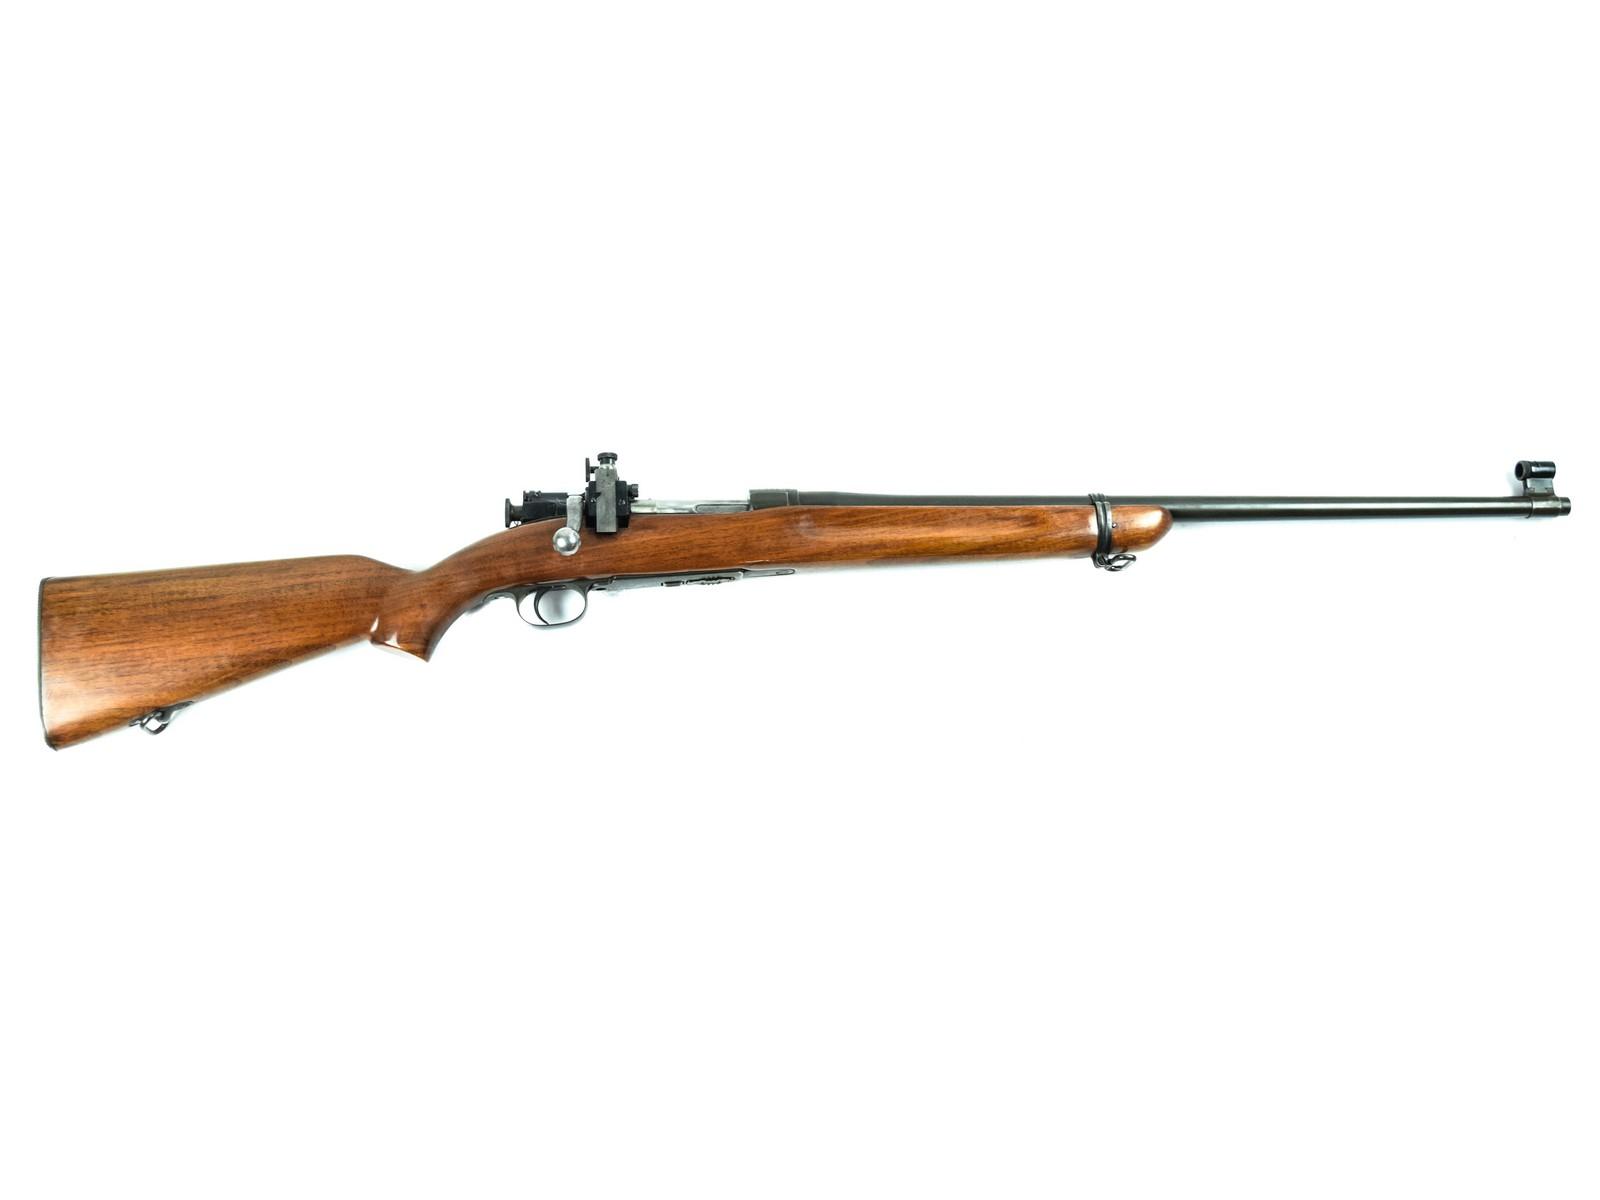 Springfield Model 1922 Mark II 22LR Caliber Rifle